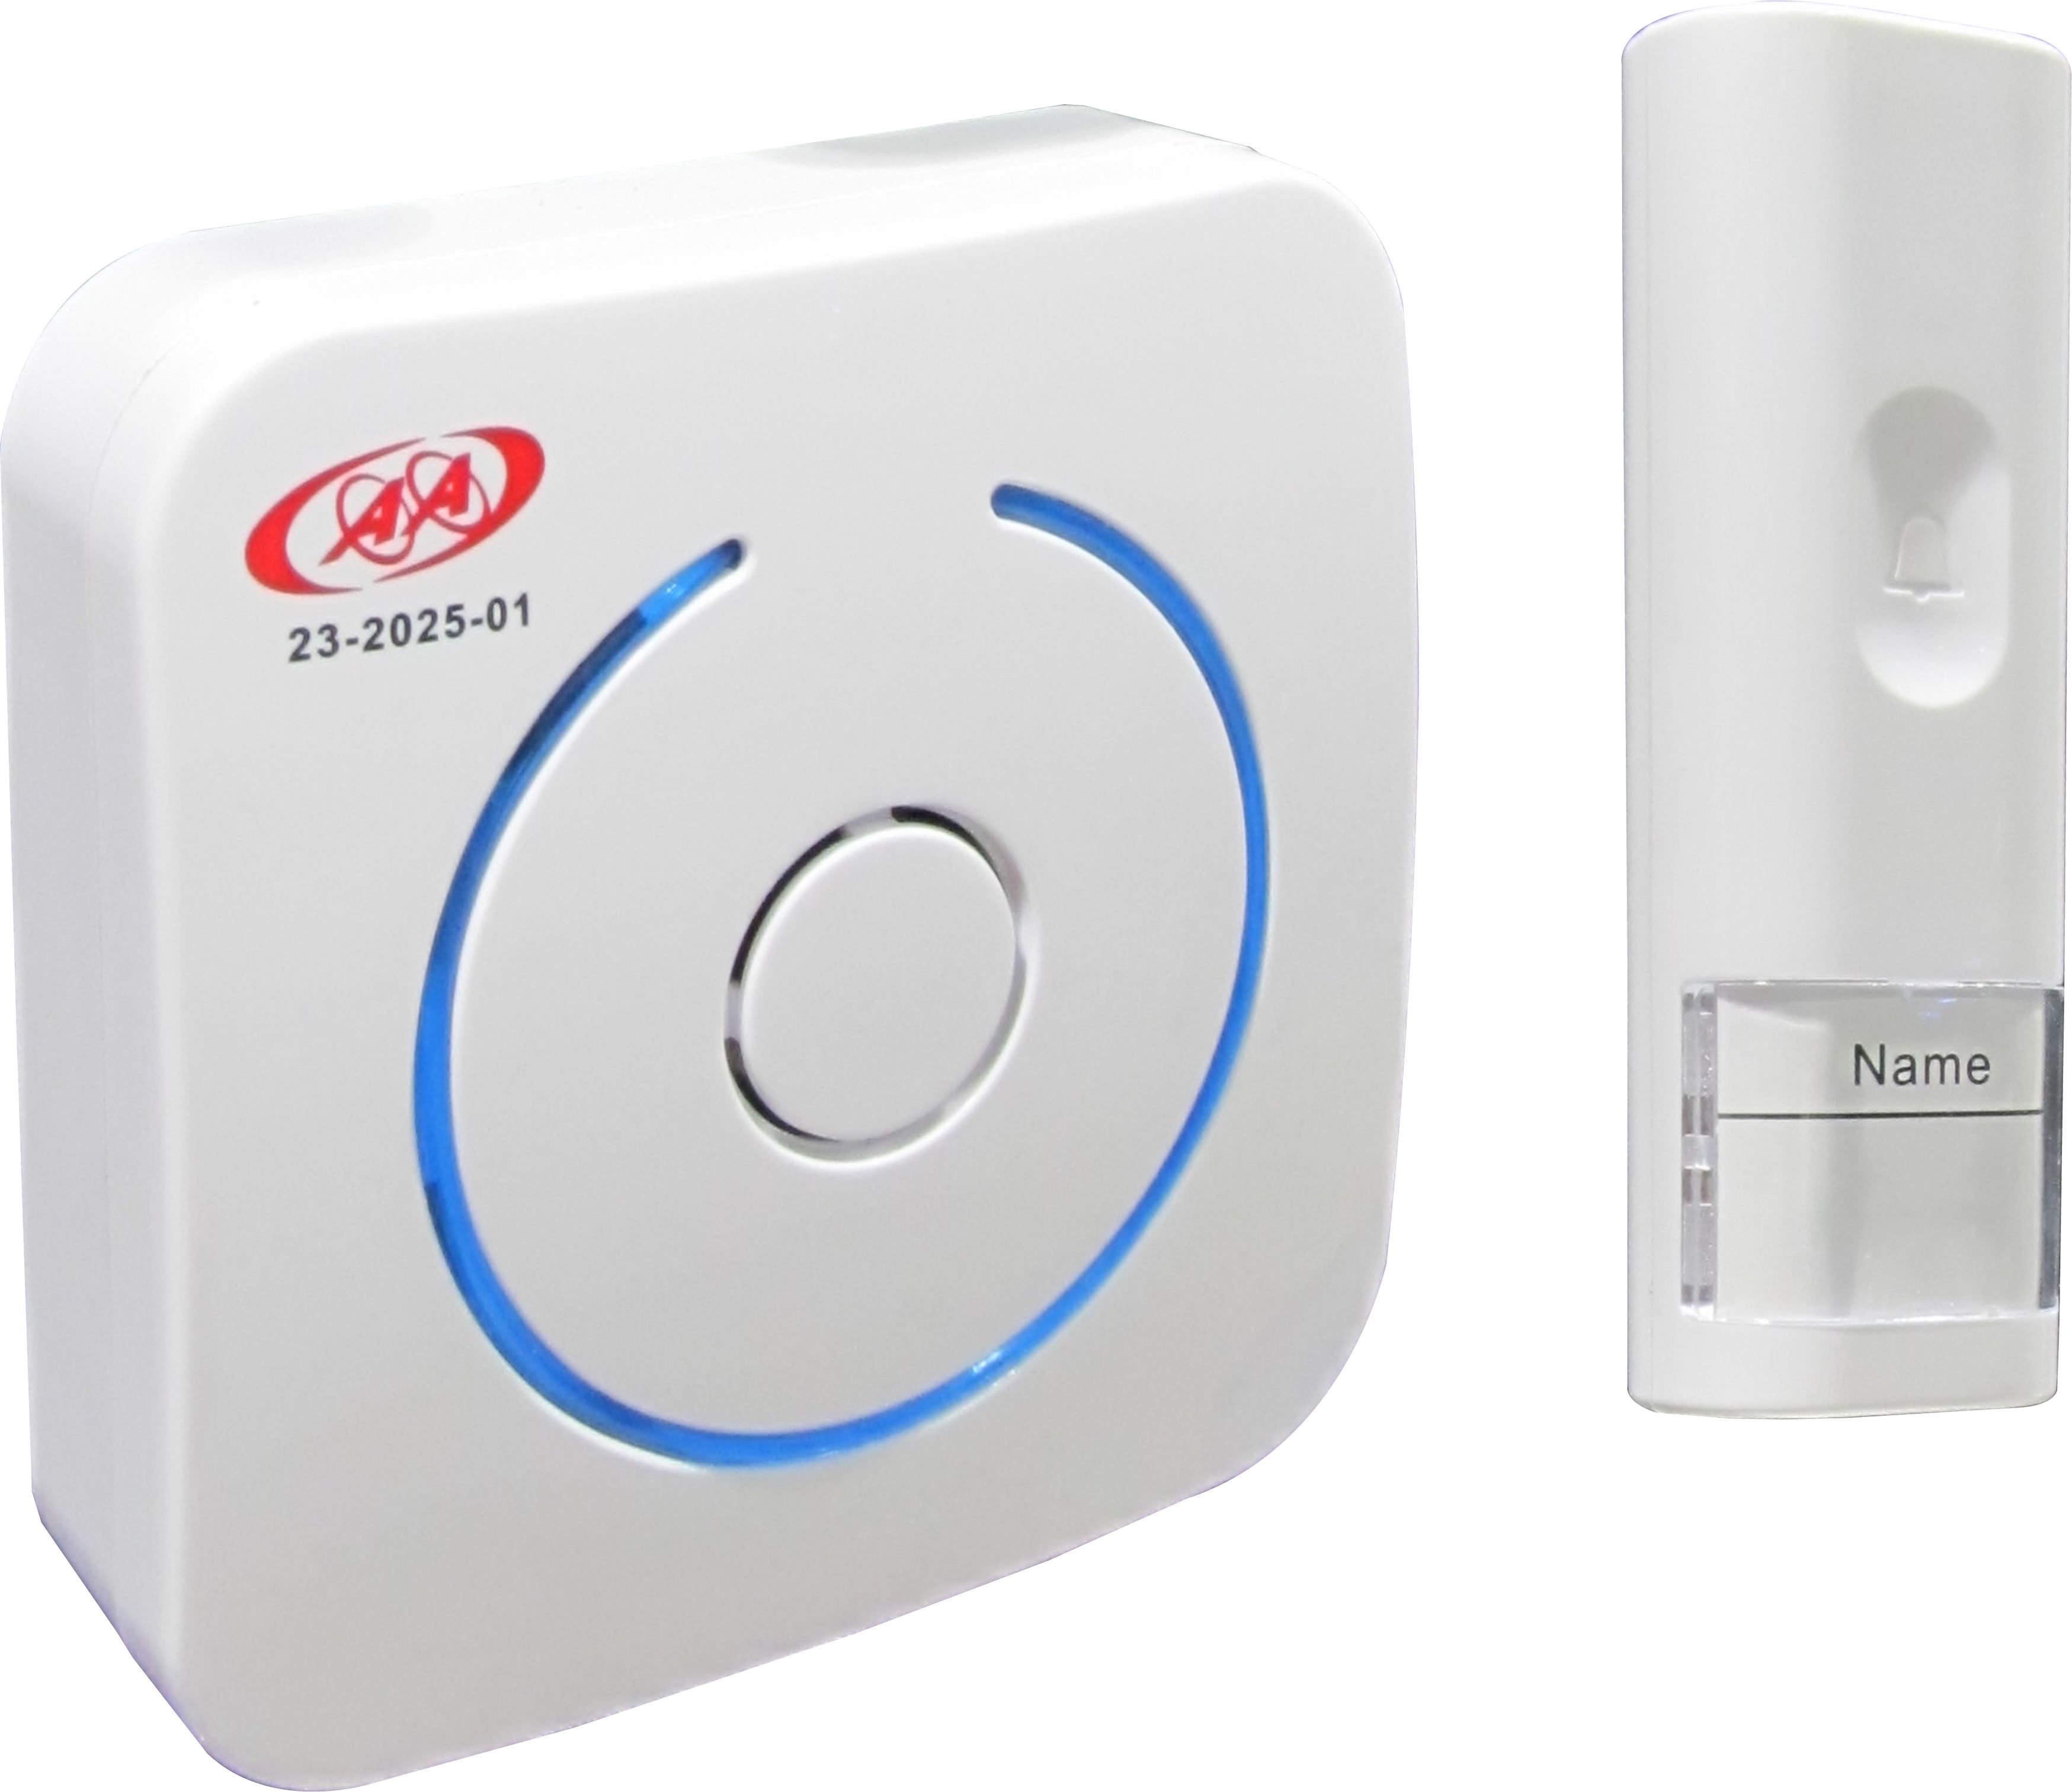 23-2025-01 Wireless Doorbell Kit - 1*Receiver & 1*Touch Button Remote